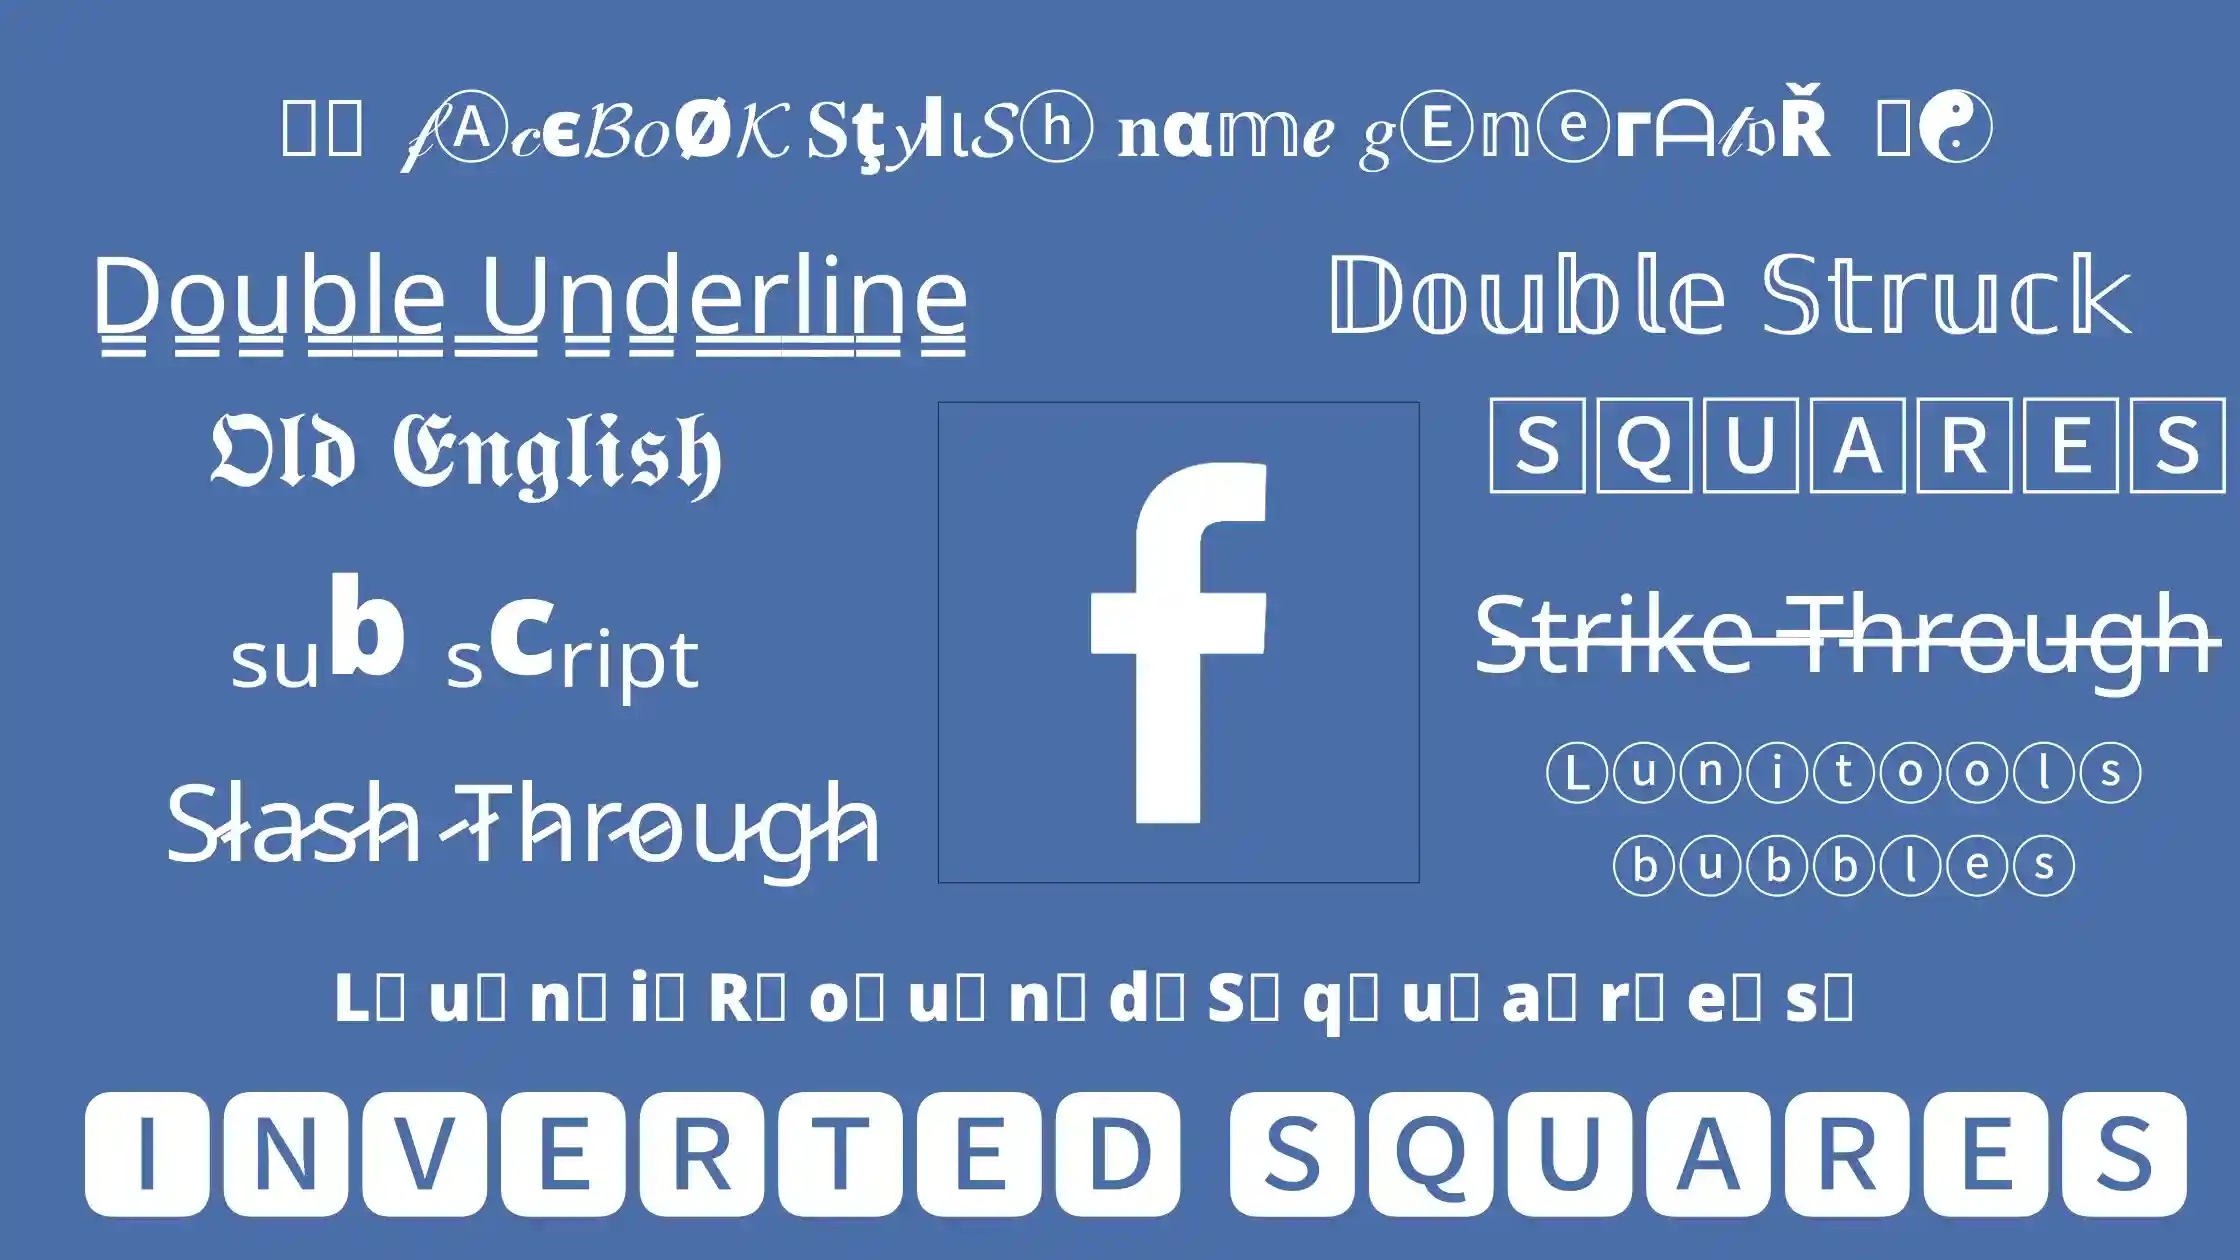 facebook name generator